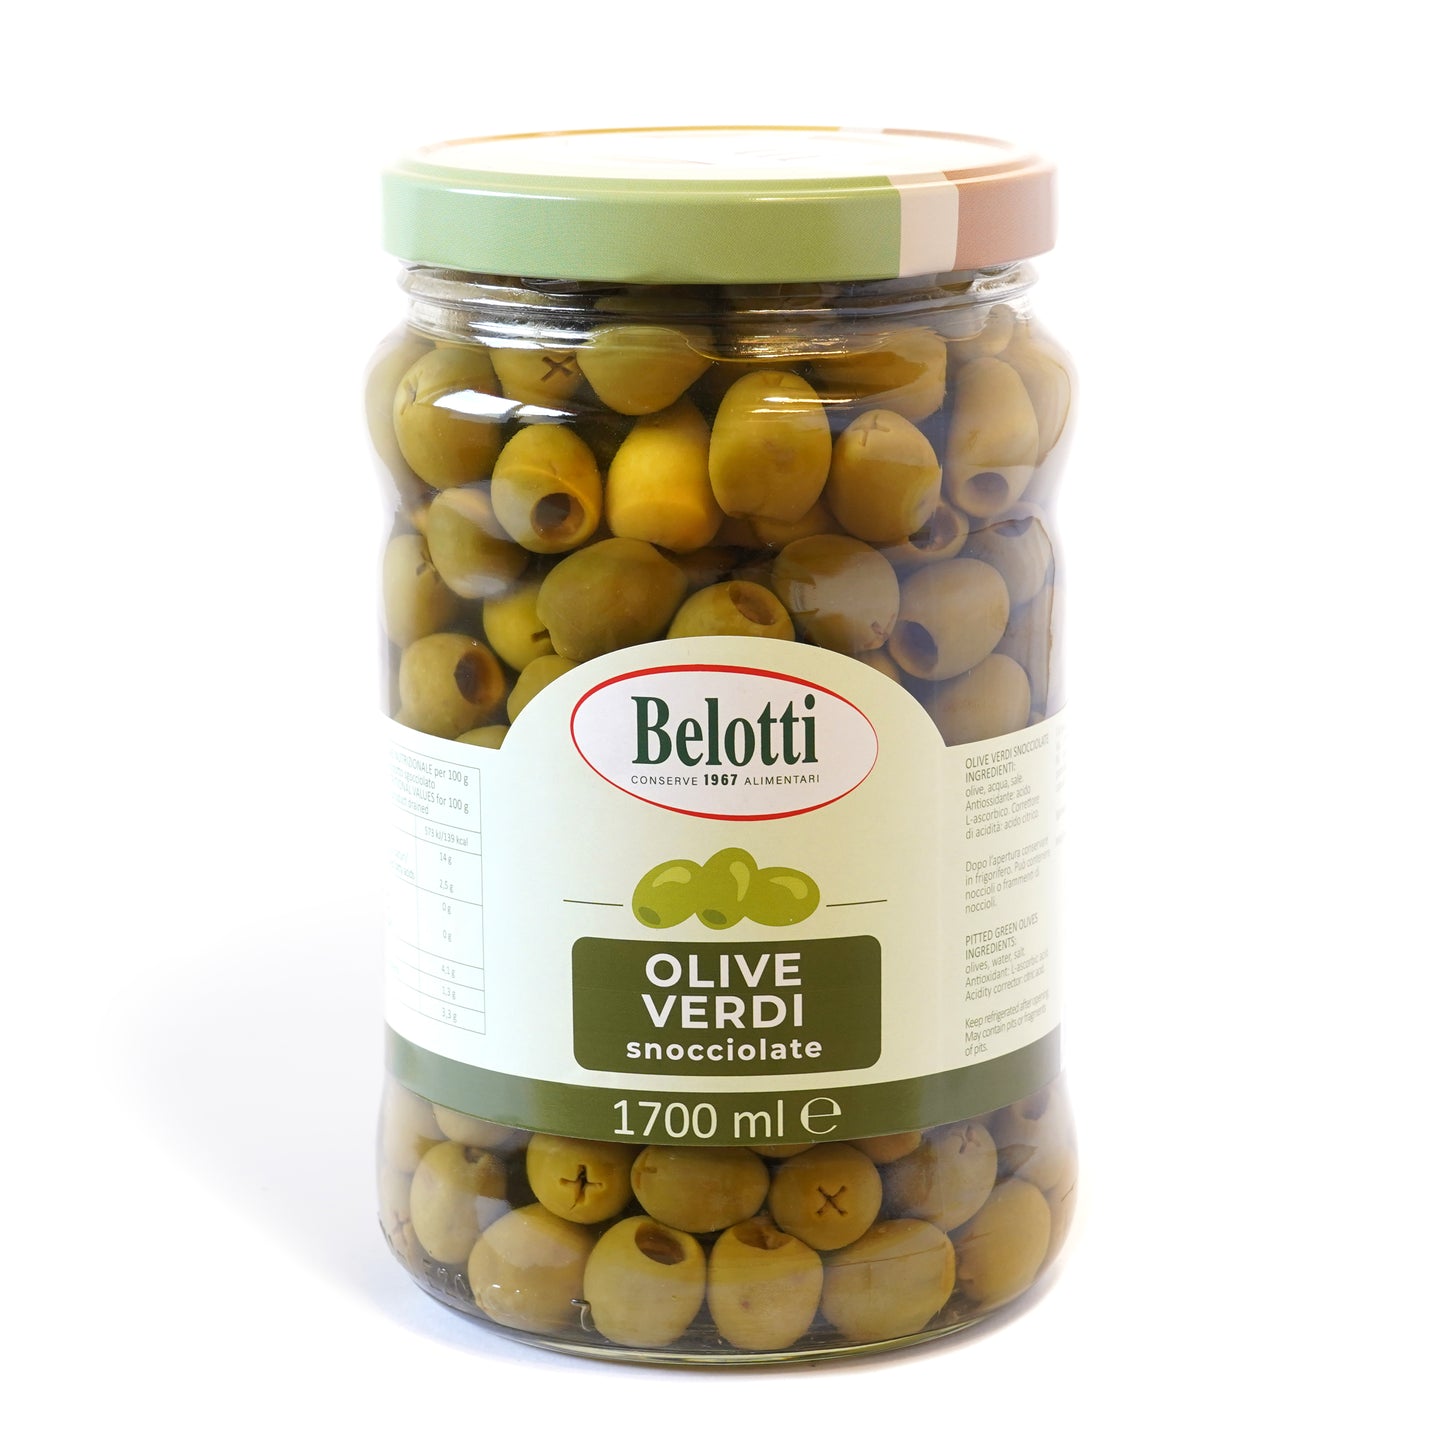 Olive verdi snocciolate. Conserve alimentari sott'olio e sottaceto.